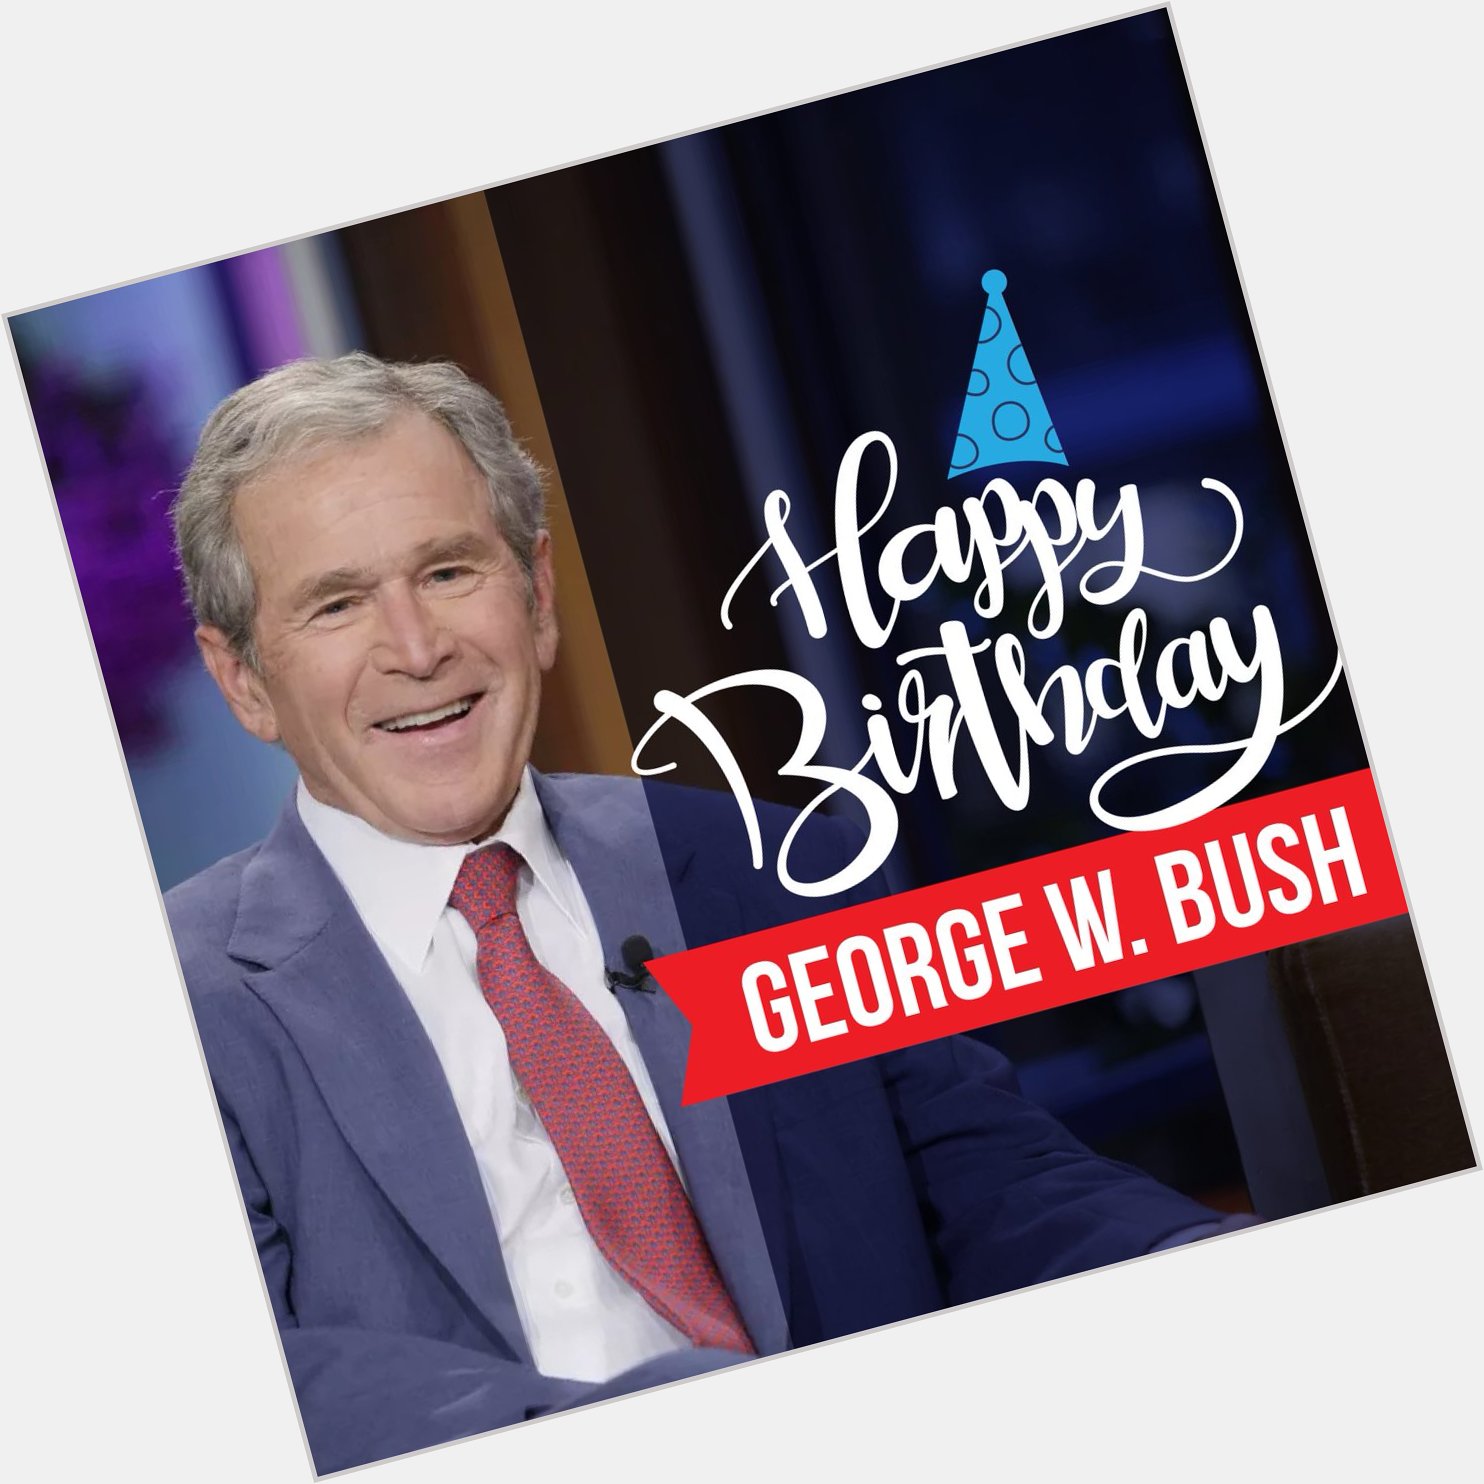 To wish our 43rd President, George W. Bush, a happy birthday! 